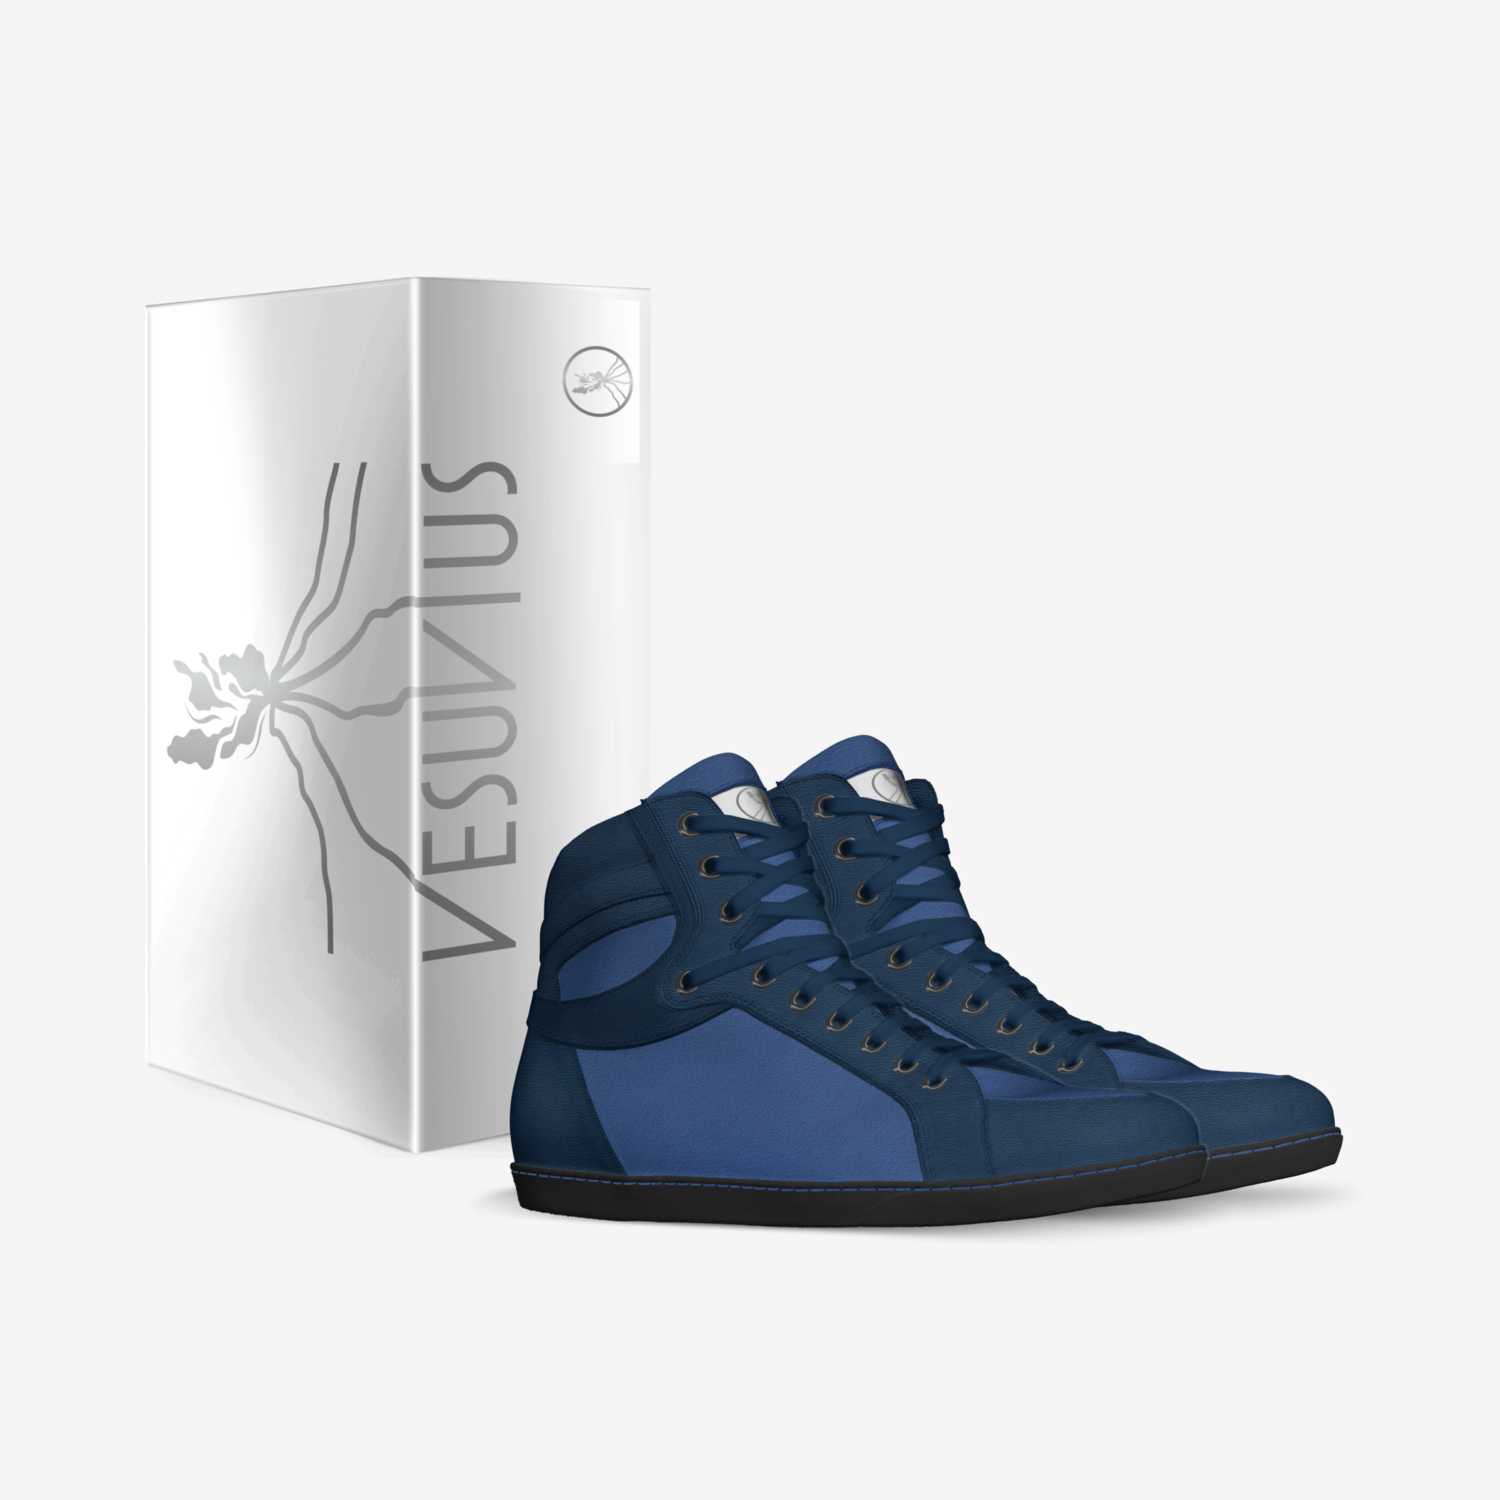 Niccolò custom made in Italy shoes by Tiffany Kaplan | Box view